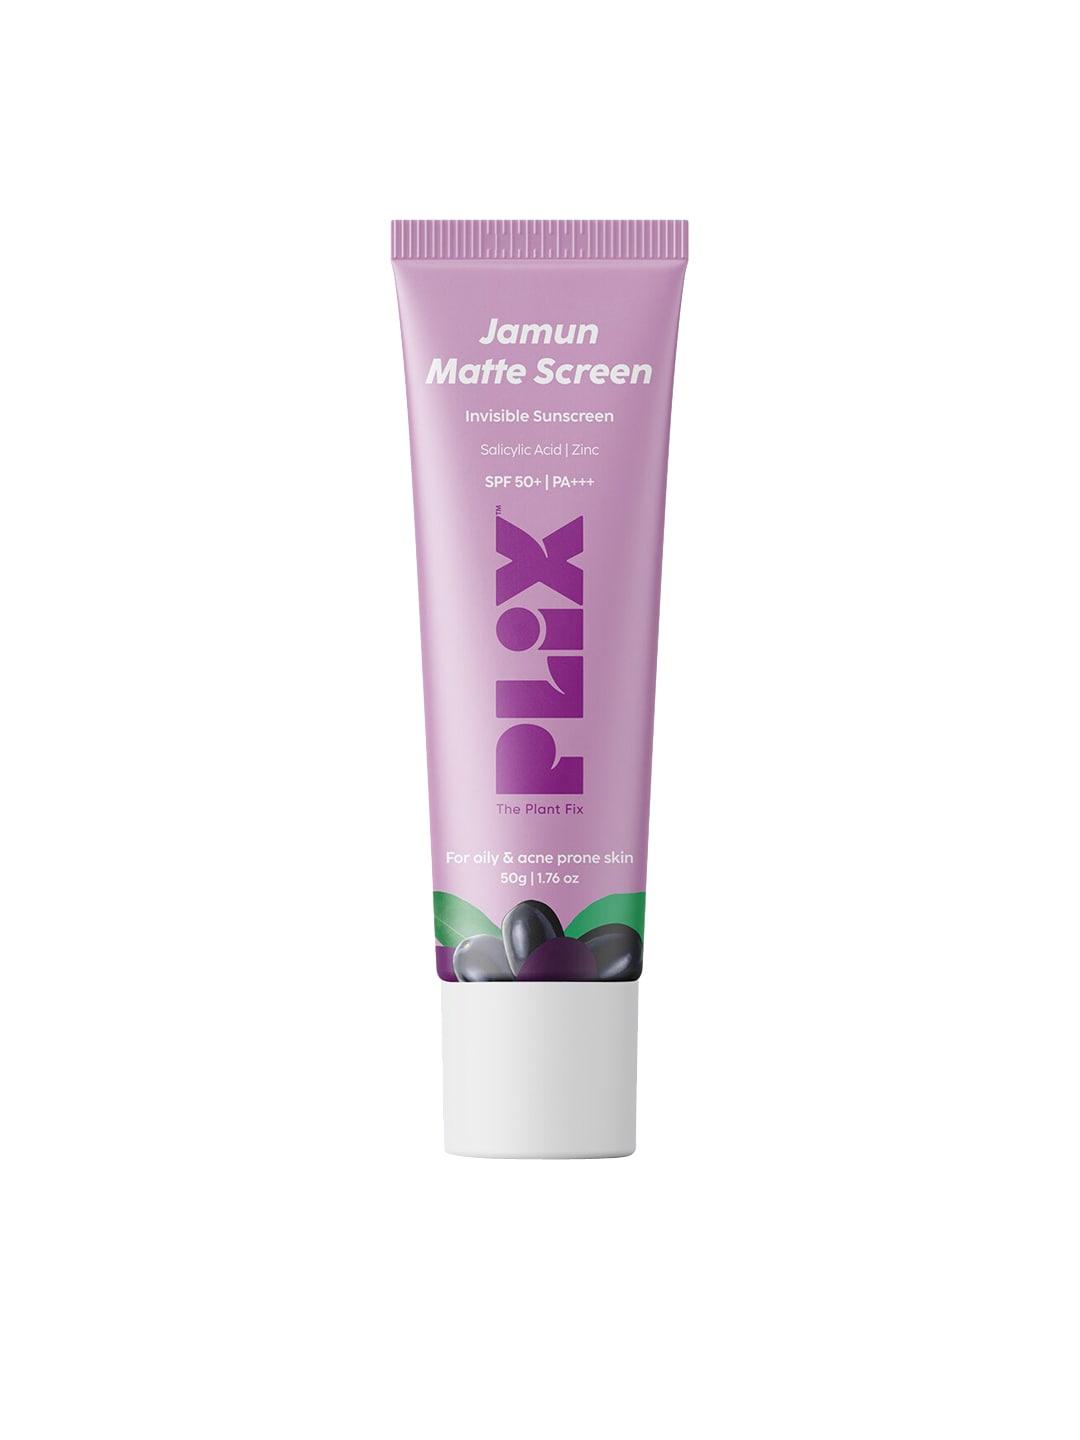 plix the plant fix jamun matte screen invisible lightweight sunscreen spf50+ pa+++ - 50 g